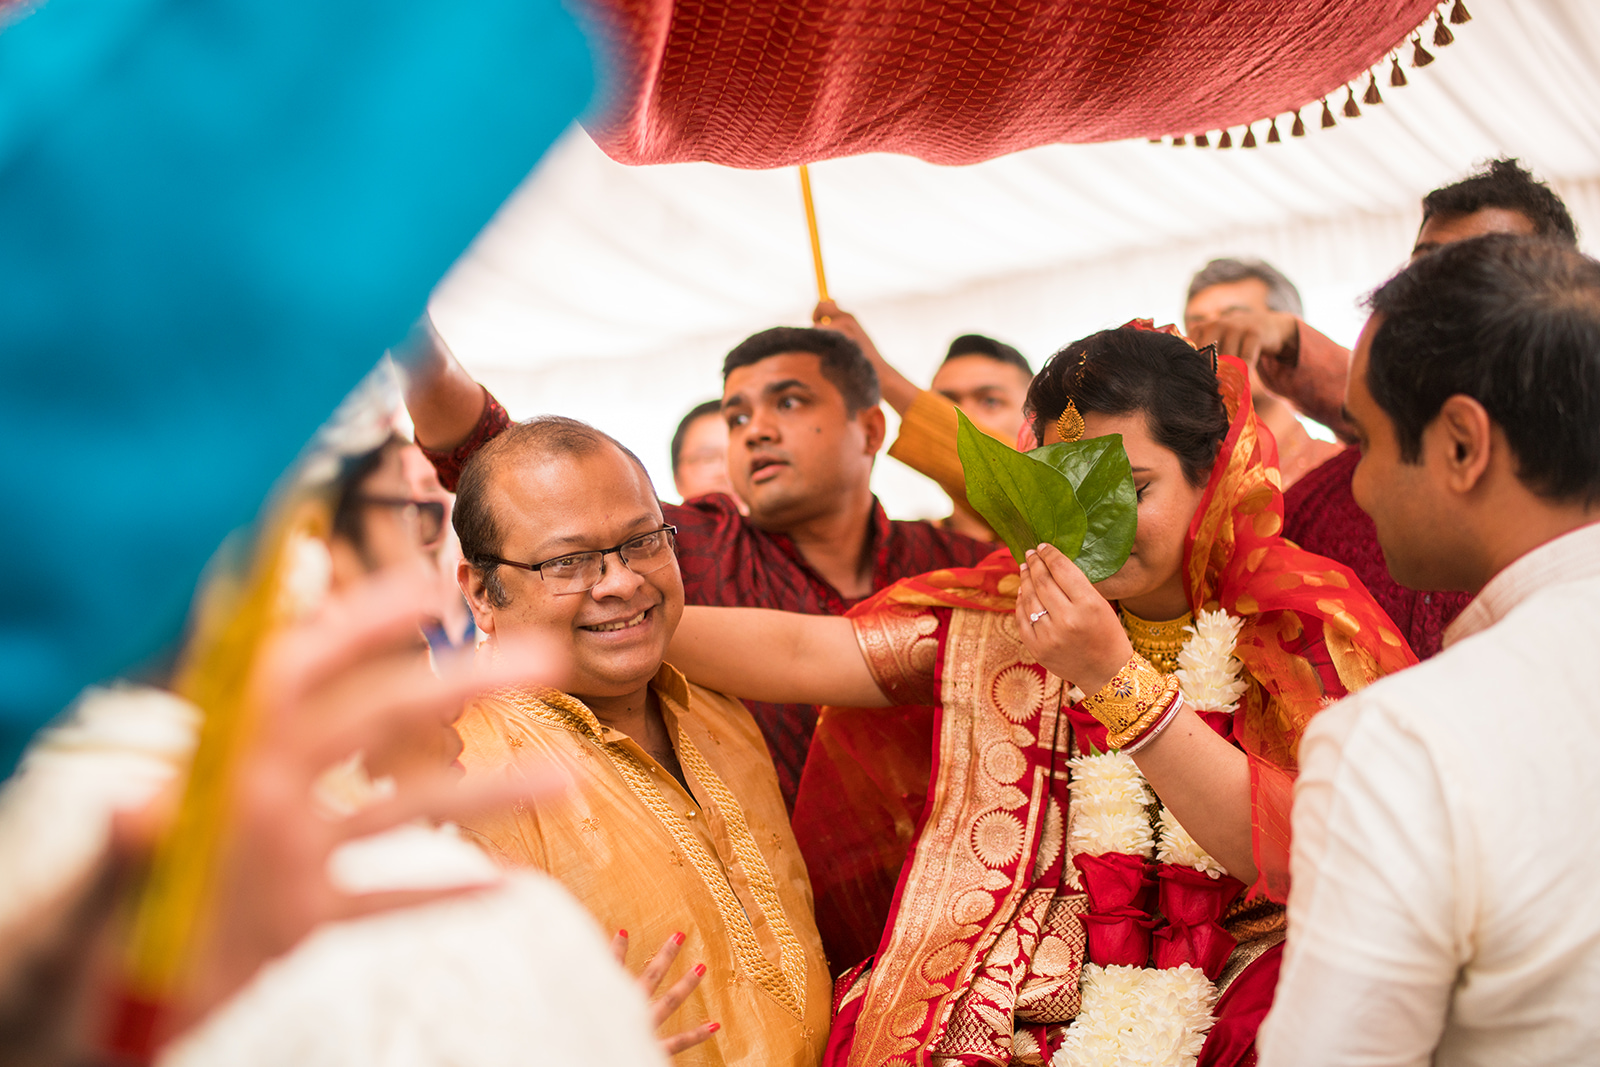 Le Cape Weddings - South Asian Wedding - Ishani and Sidhart - Ceremony-25.jpg